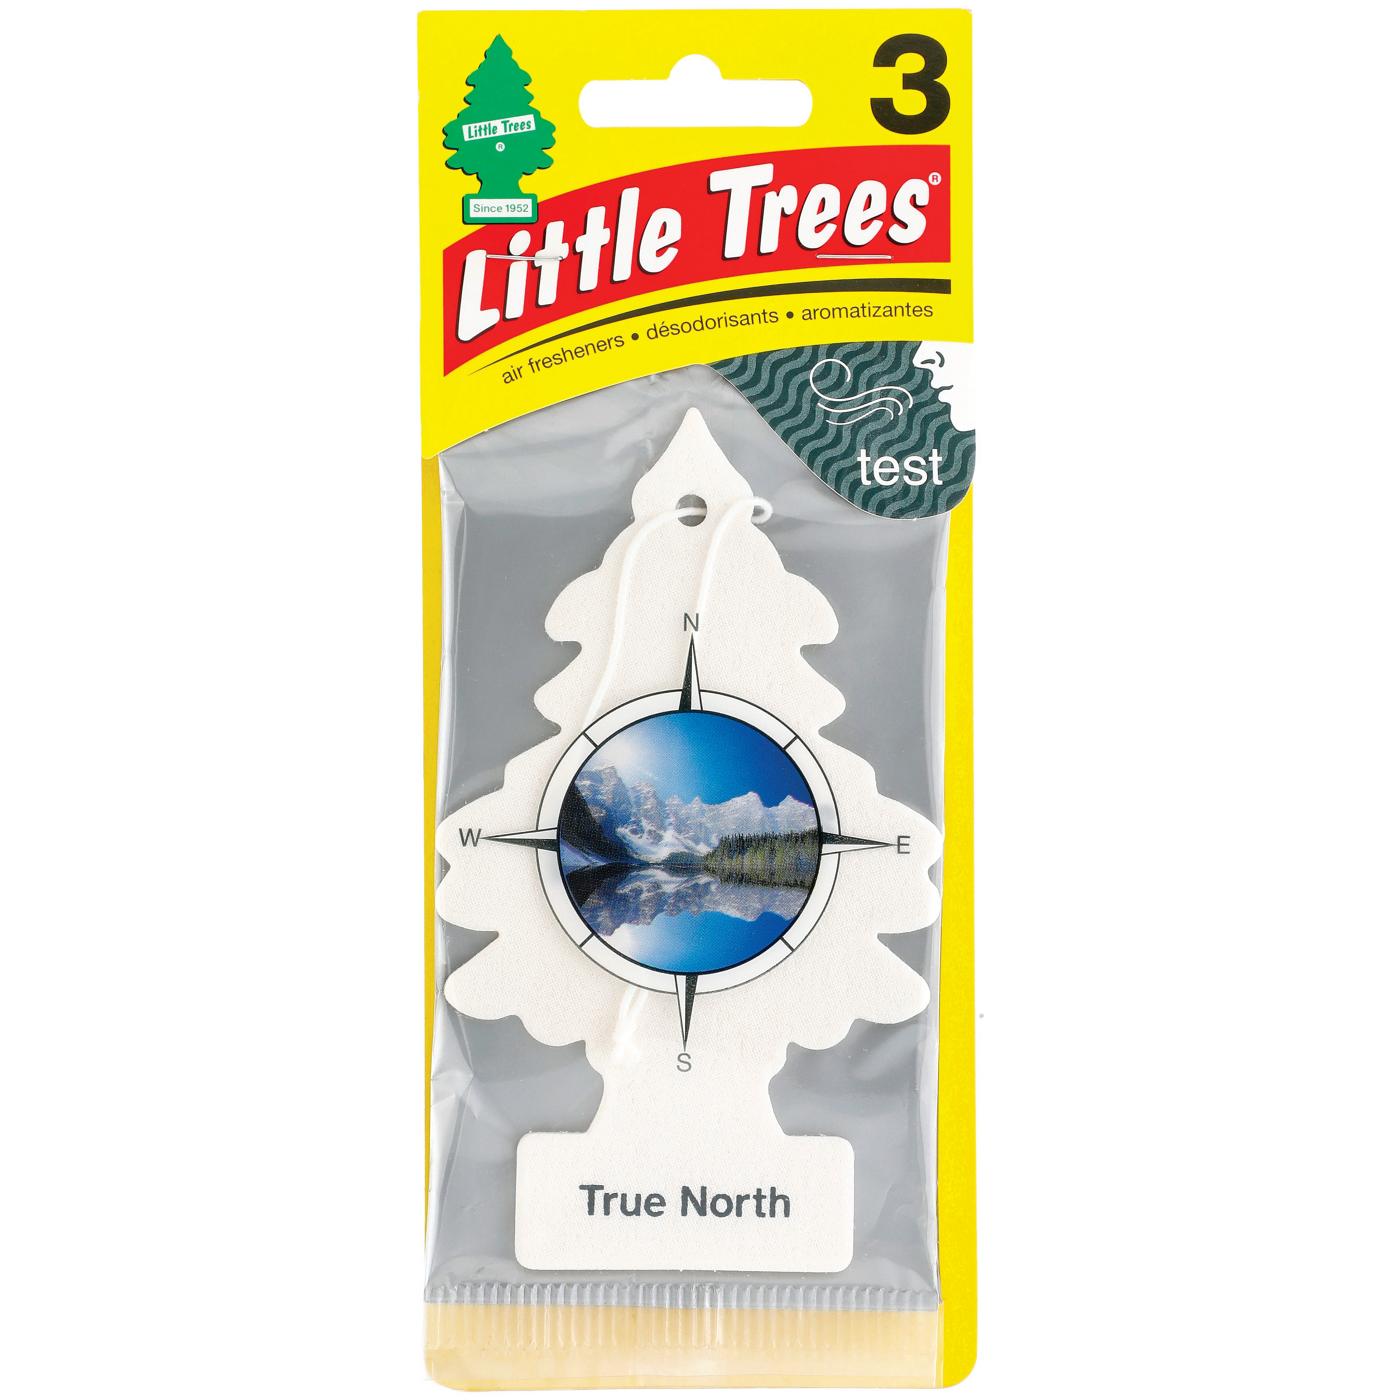 Little Trees Car Fresheners - True North